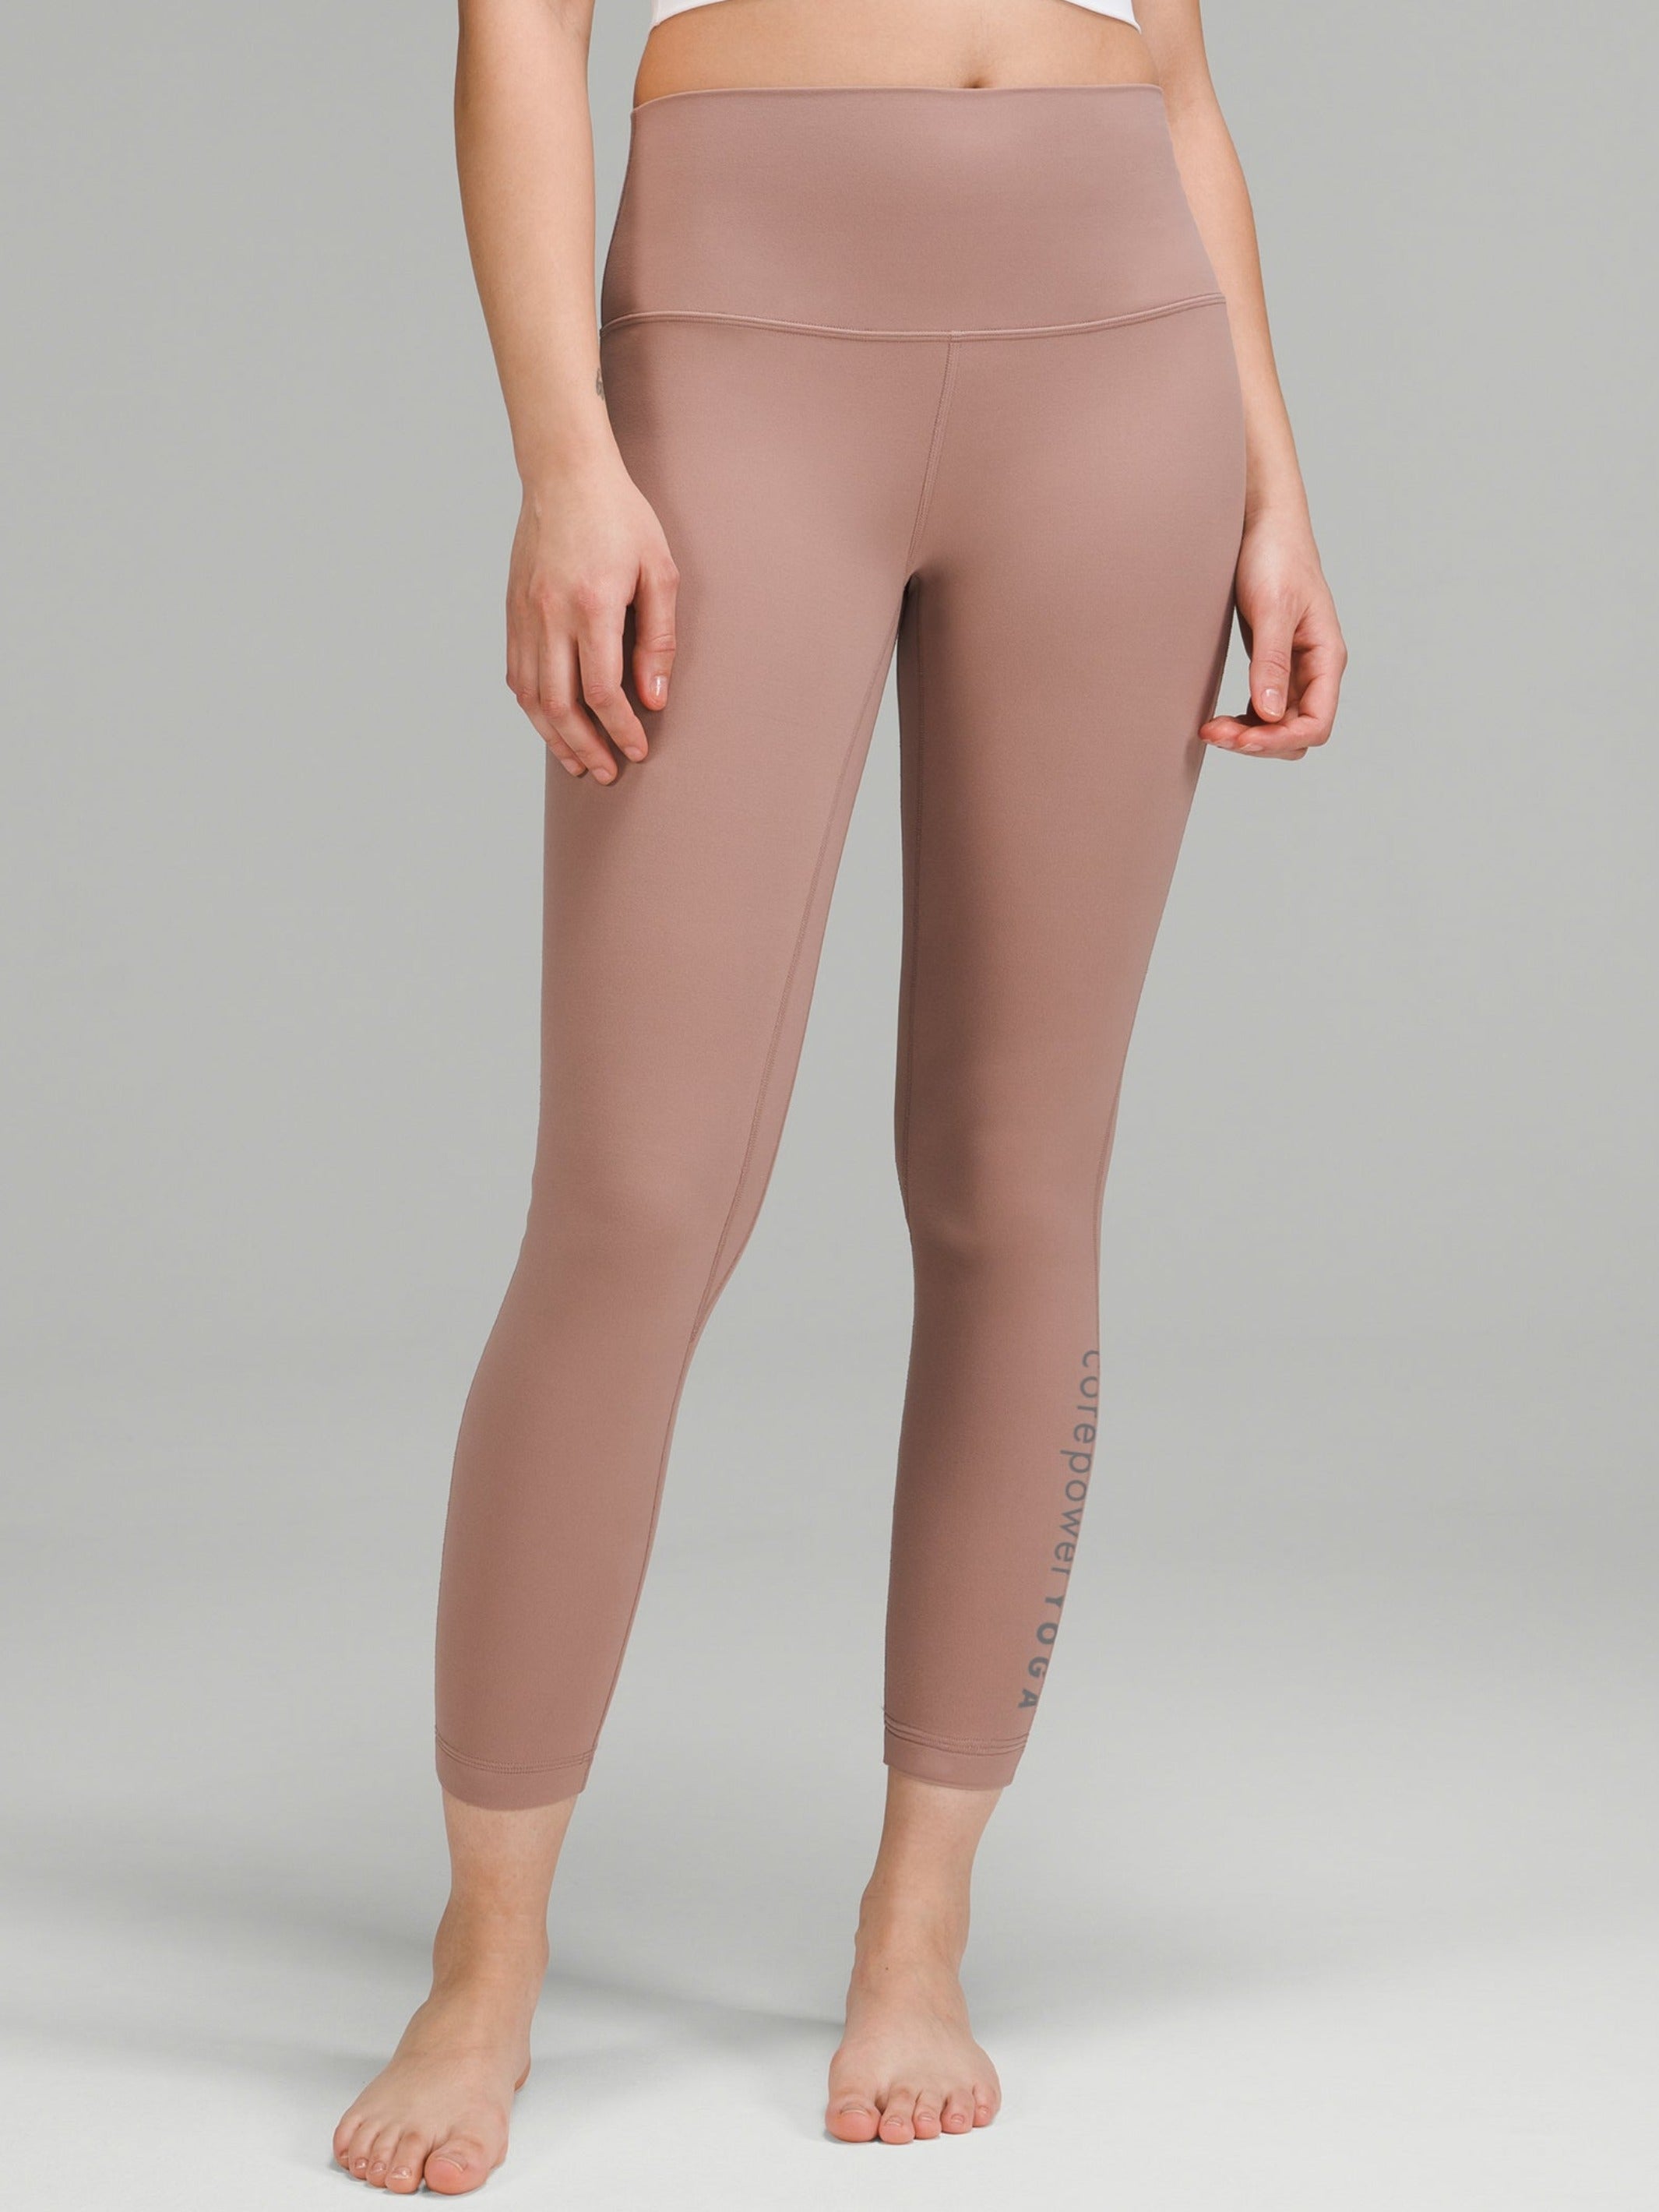 Shop the Align Pant II 25  Women's Yoga Pants. Designed to